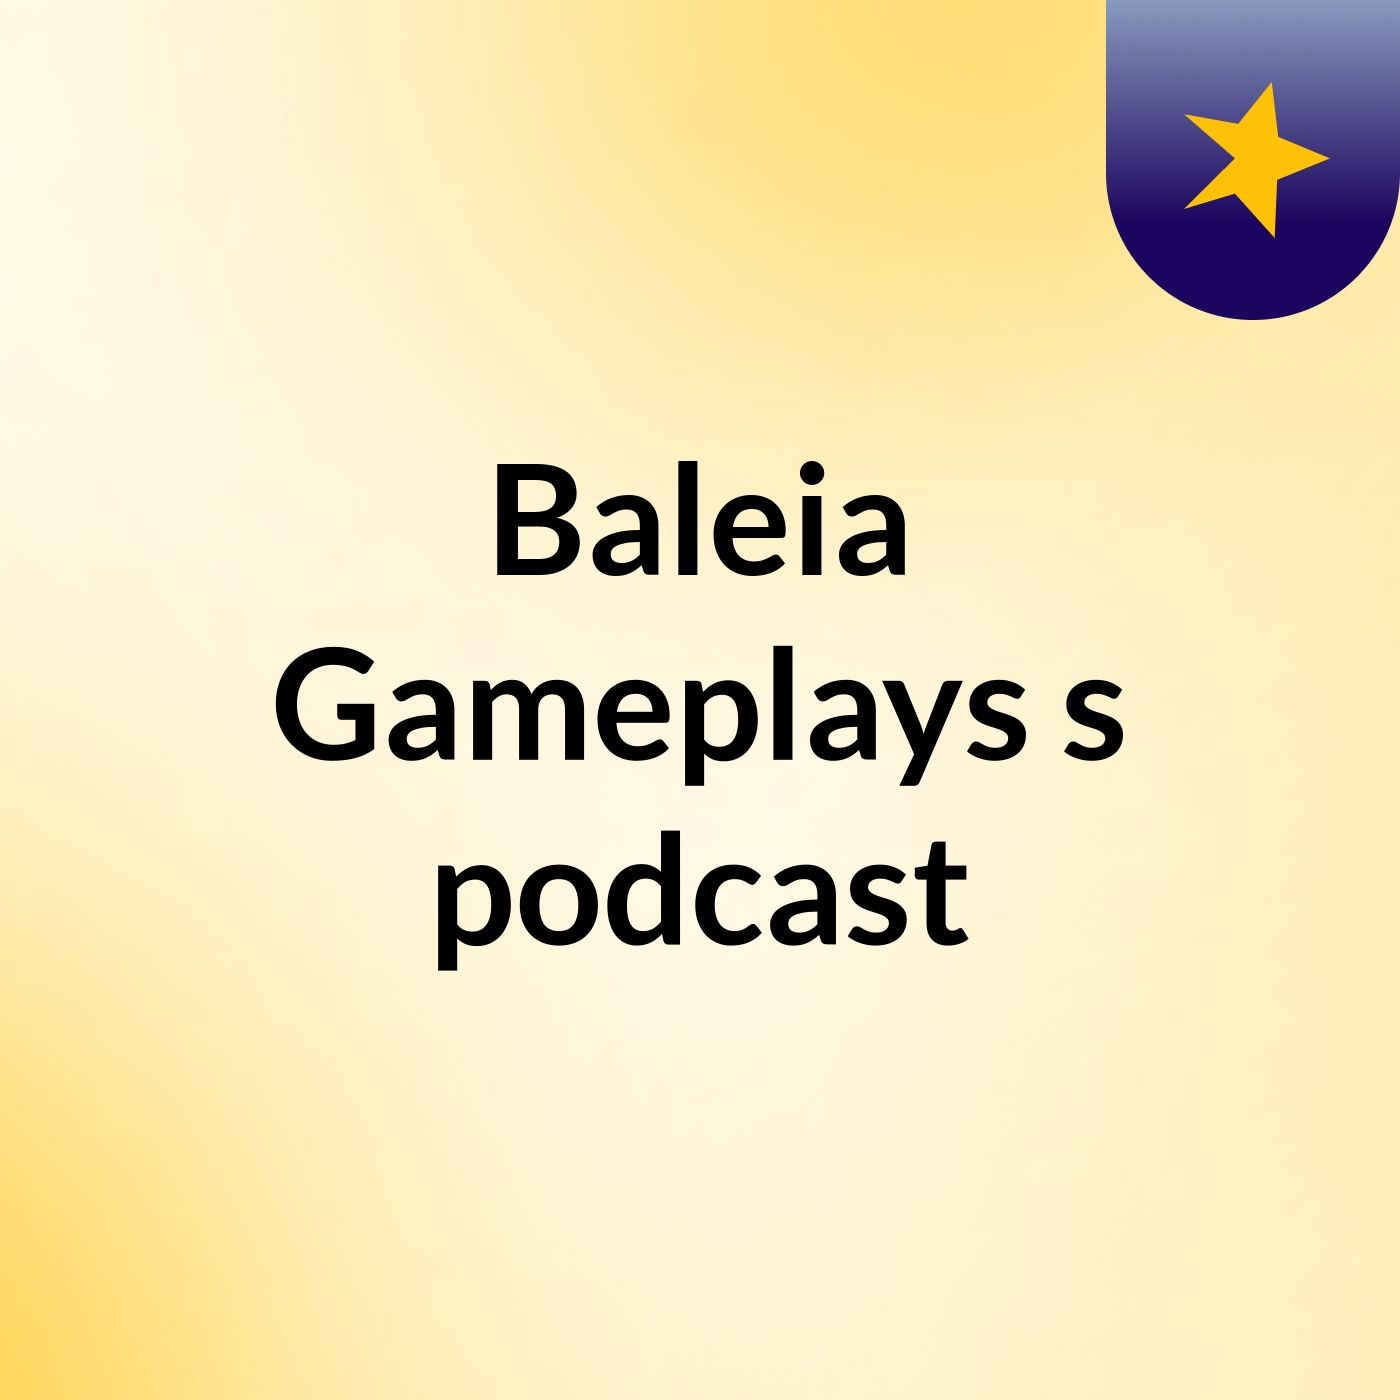 Baleia Gameplays's podcast